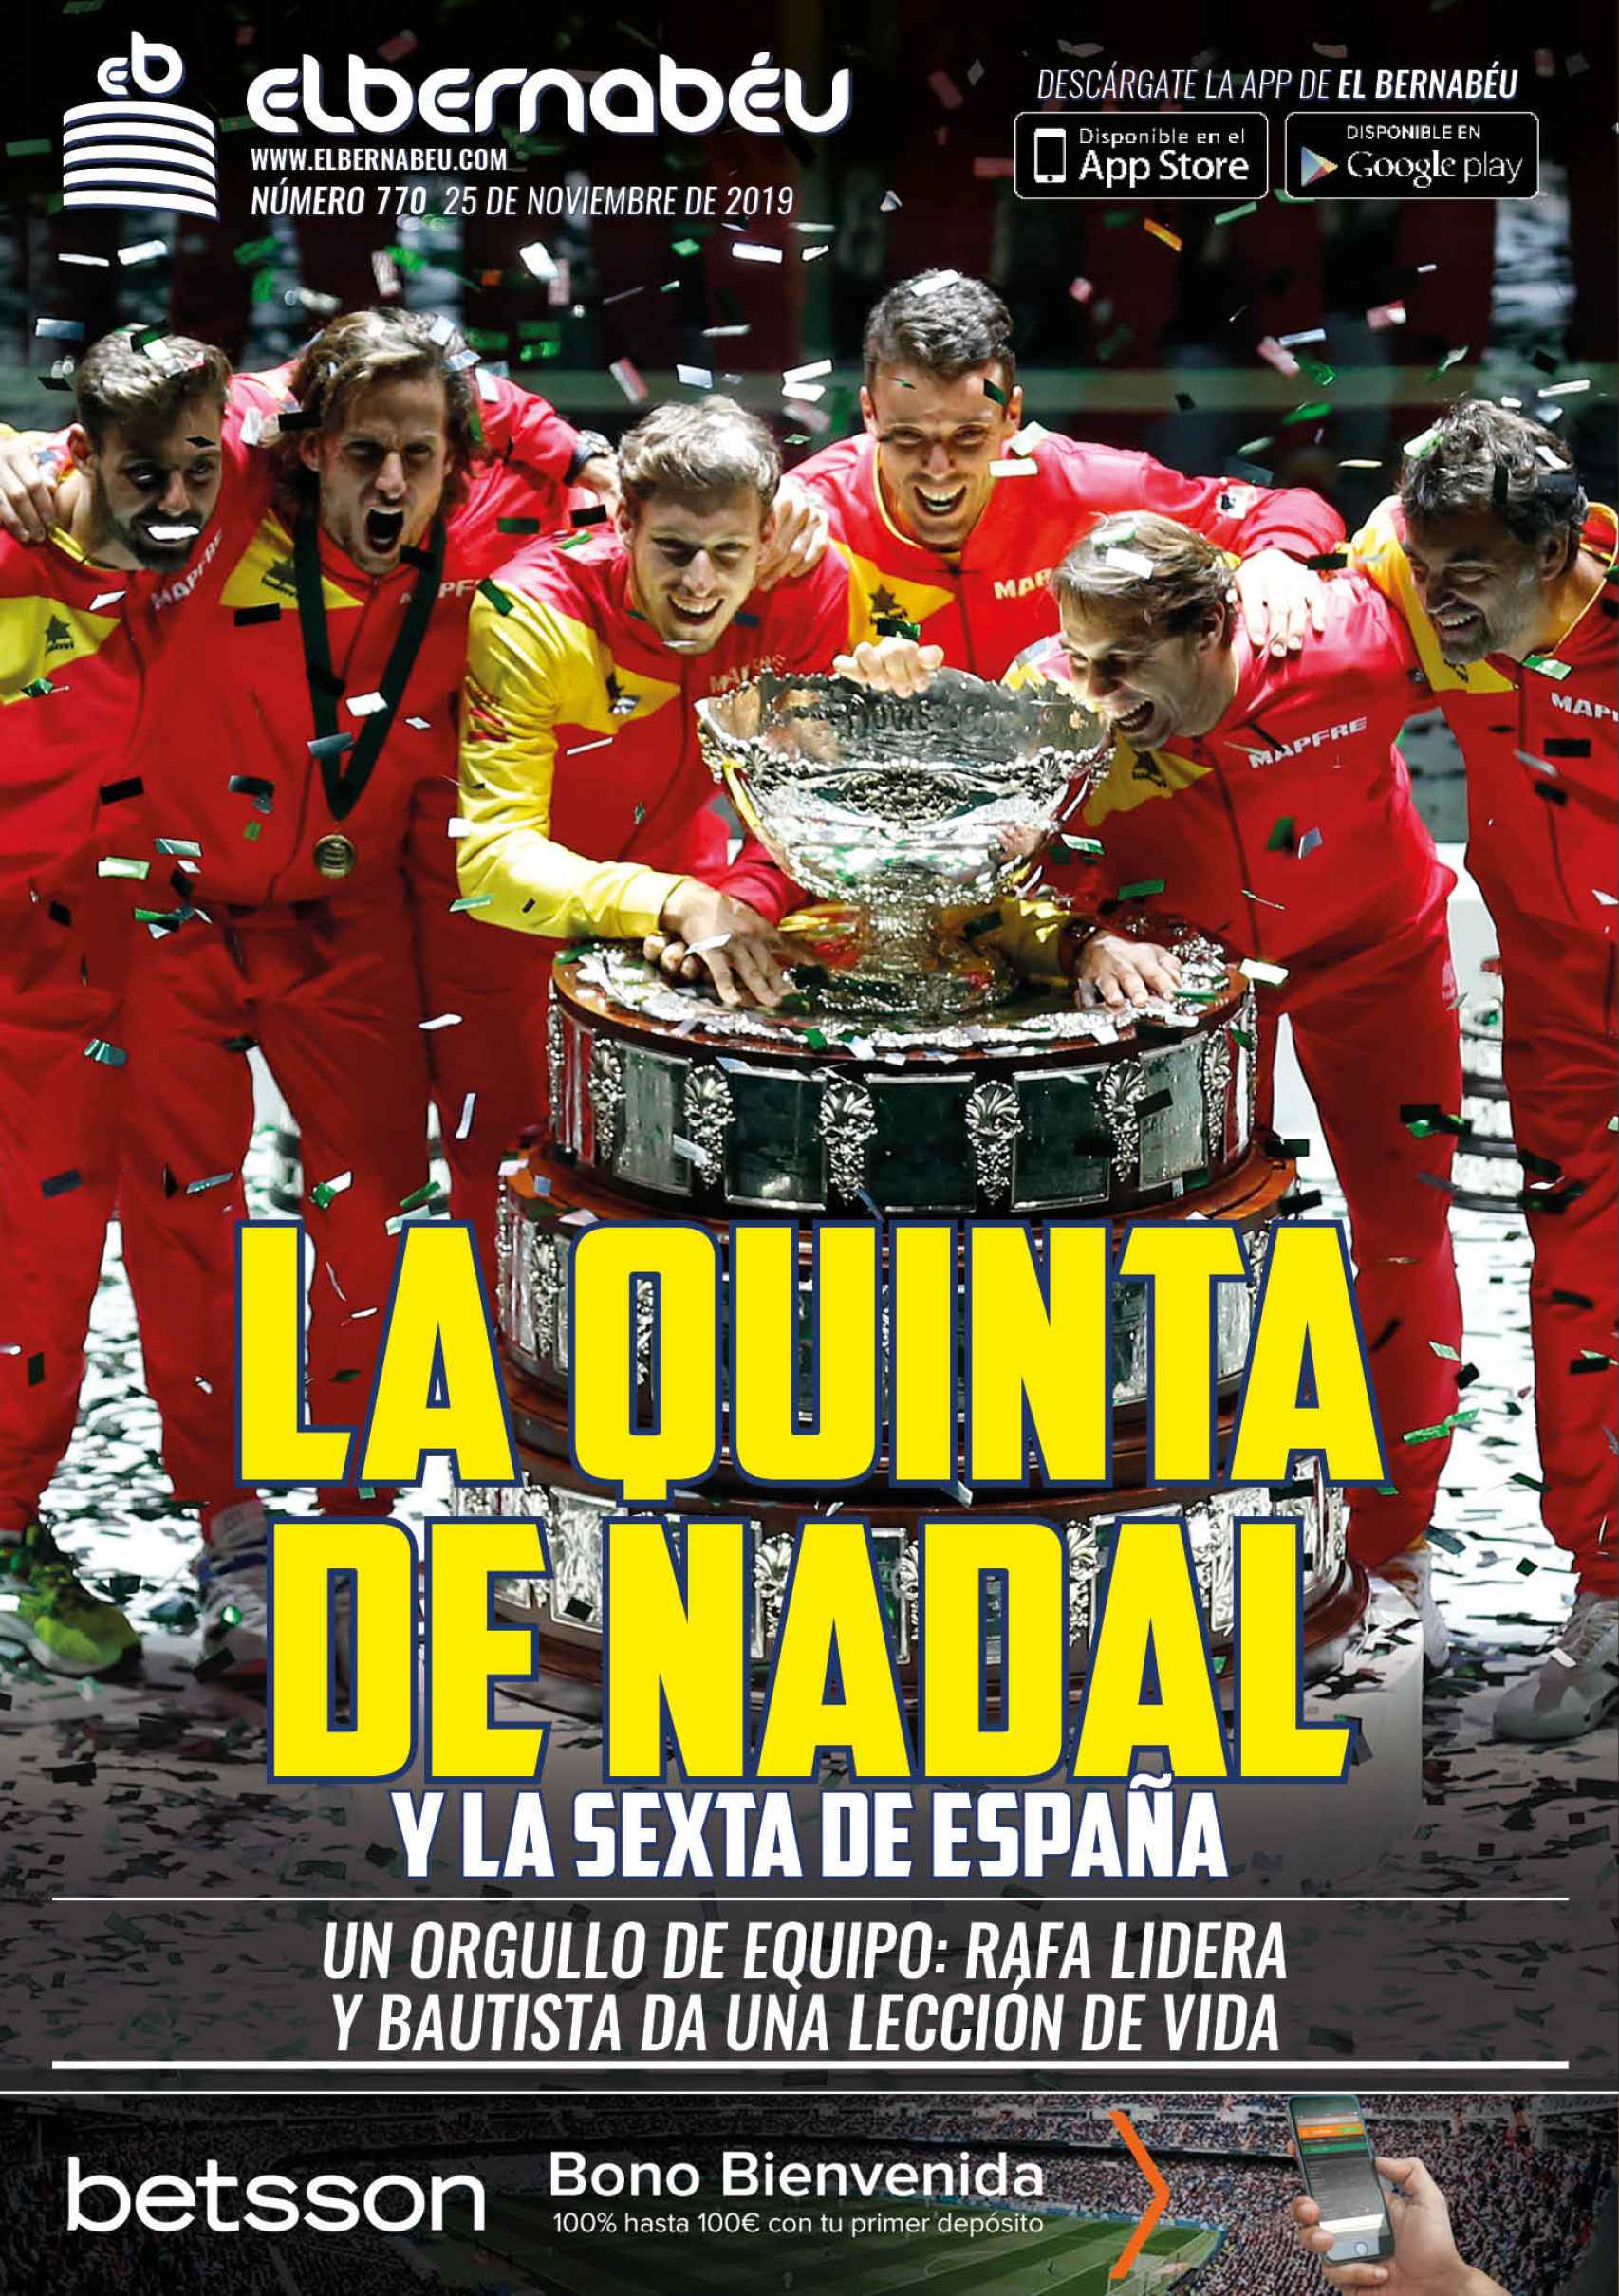 La portada de El Bernabéu (25/11/2019)